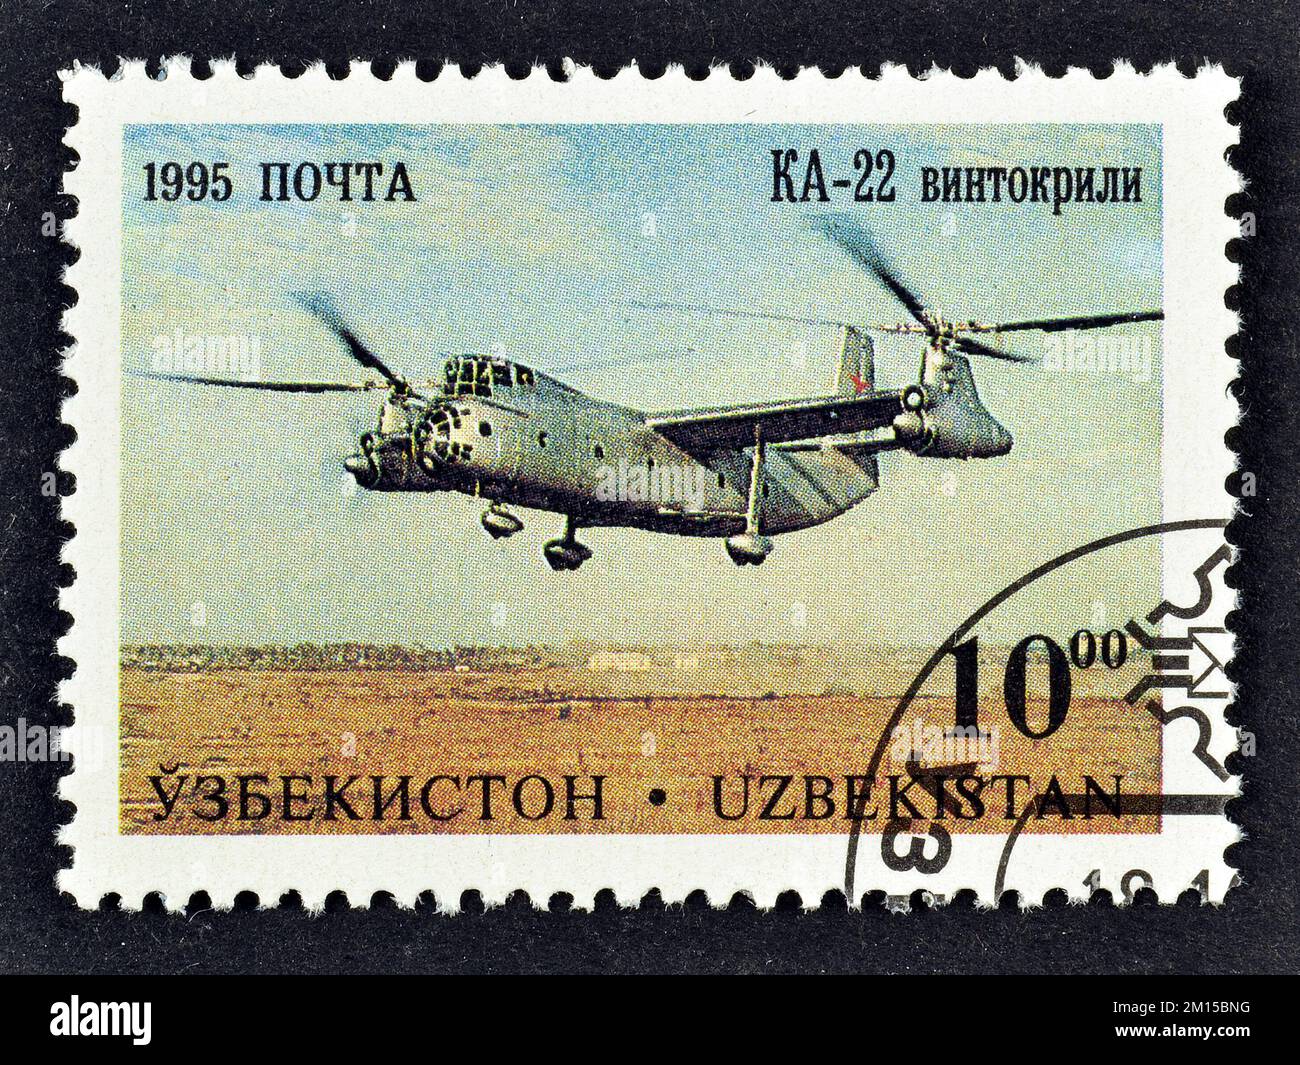 Cancelled postage stamp printed by Uzbekistan, that shows Kamov Ka-22 Helicopter, Aircraft of Tashkent's (V.P. Chkalov) Aircraft Factory, circa 1995. Stock Photo